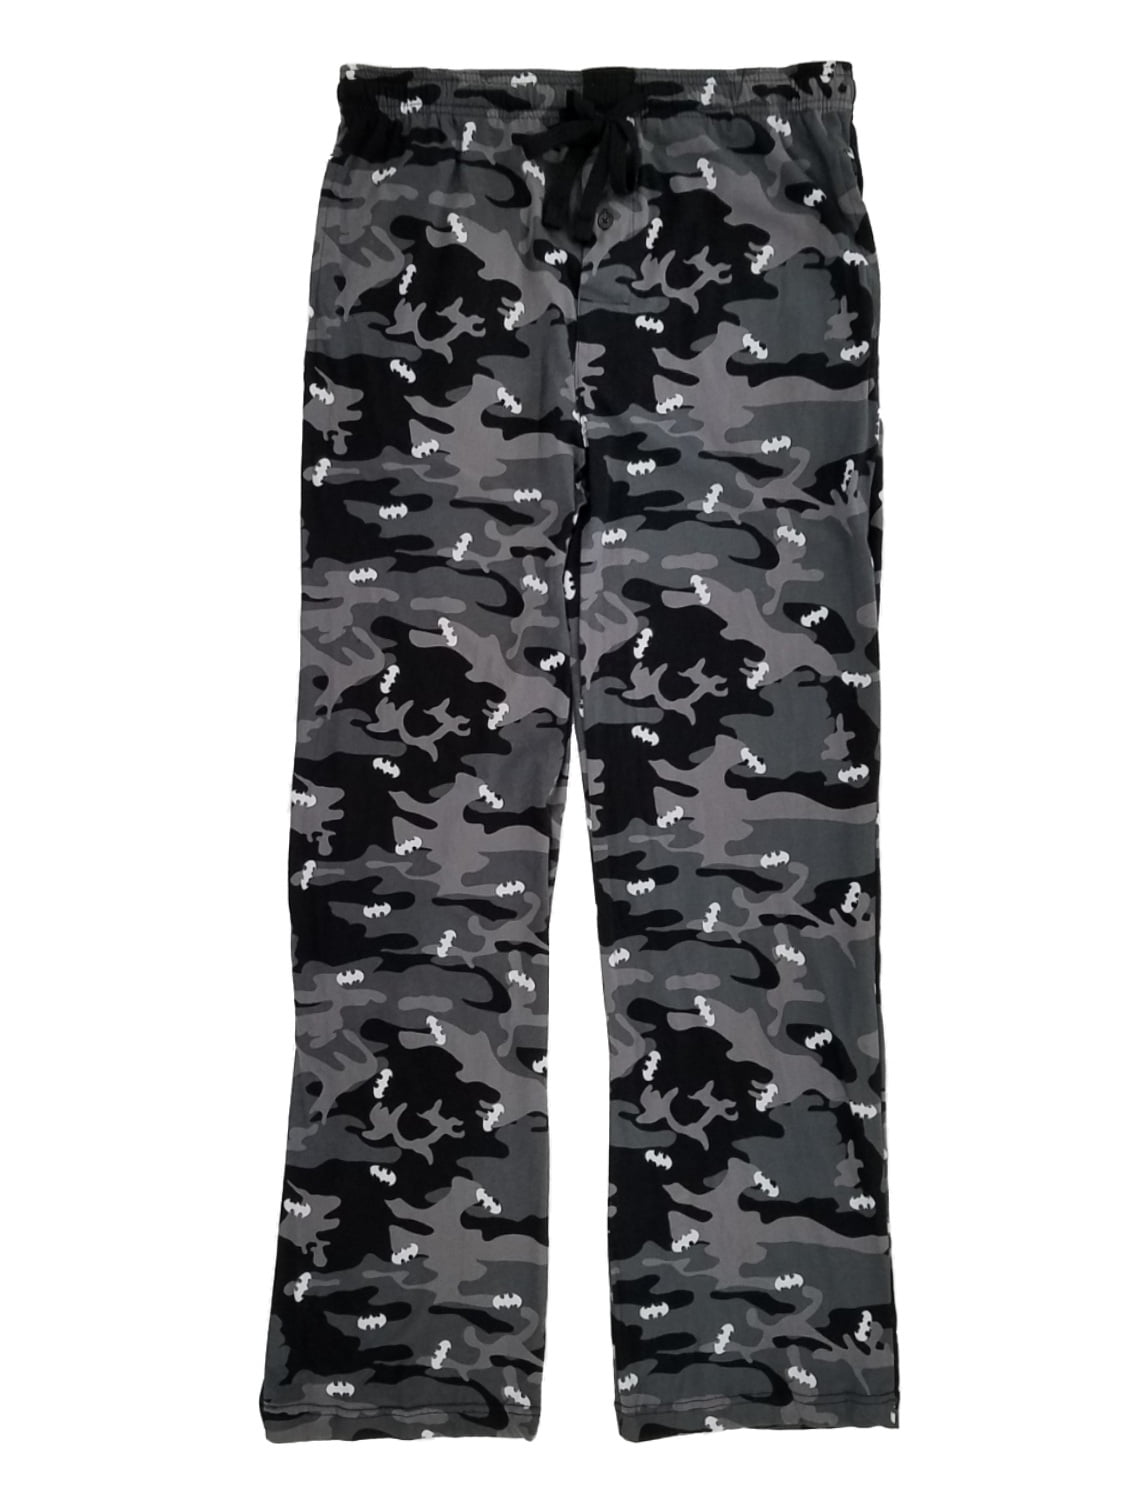 DC Comics Mens Black & Gray Batman Camouflage Knit Sleep Pants Pajama ...